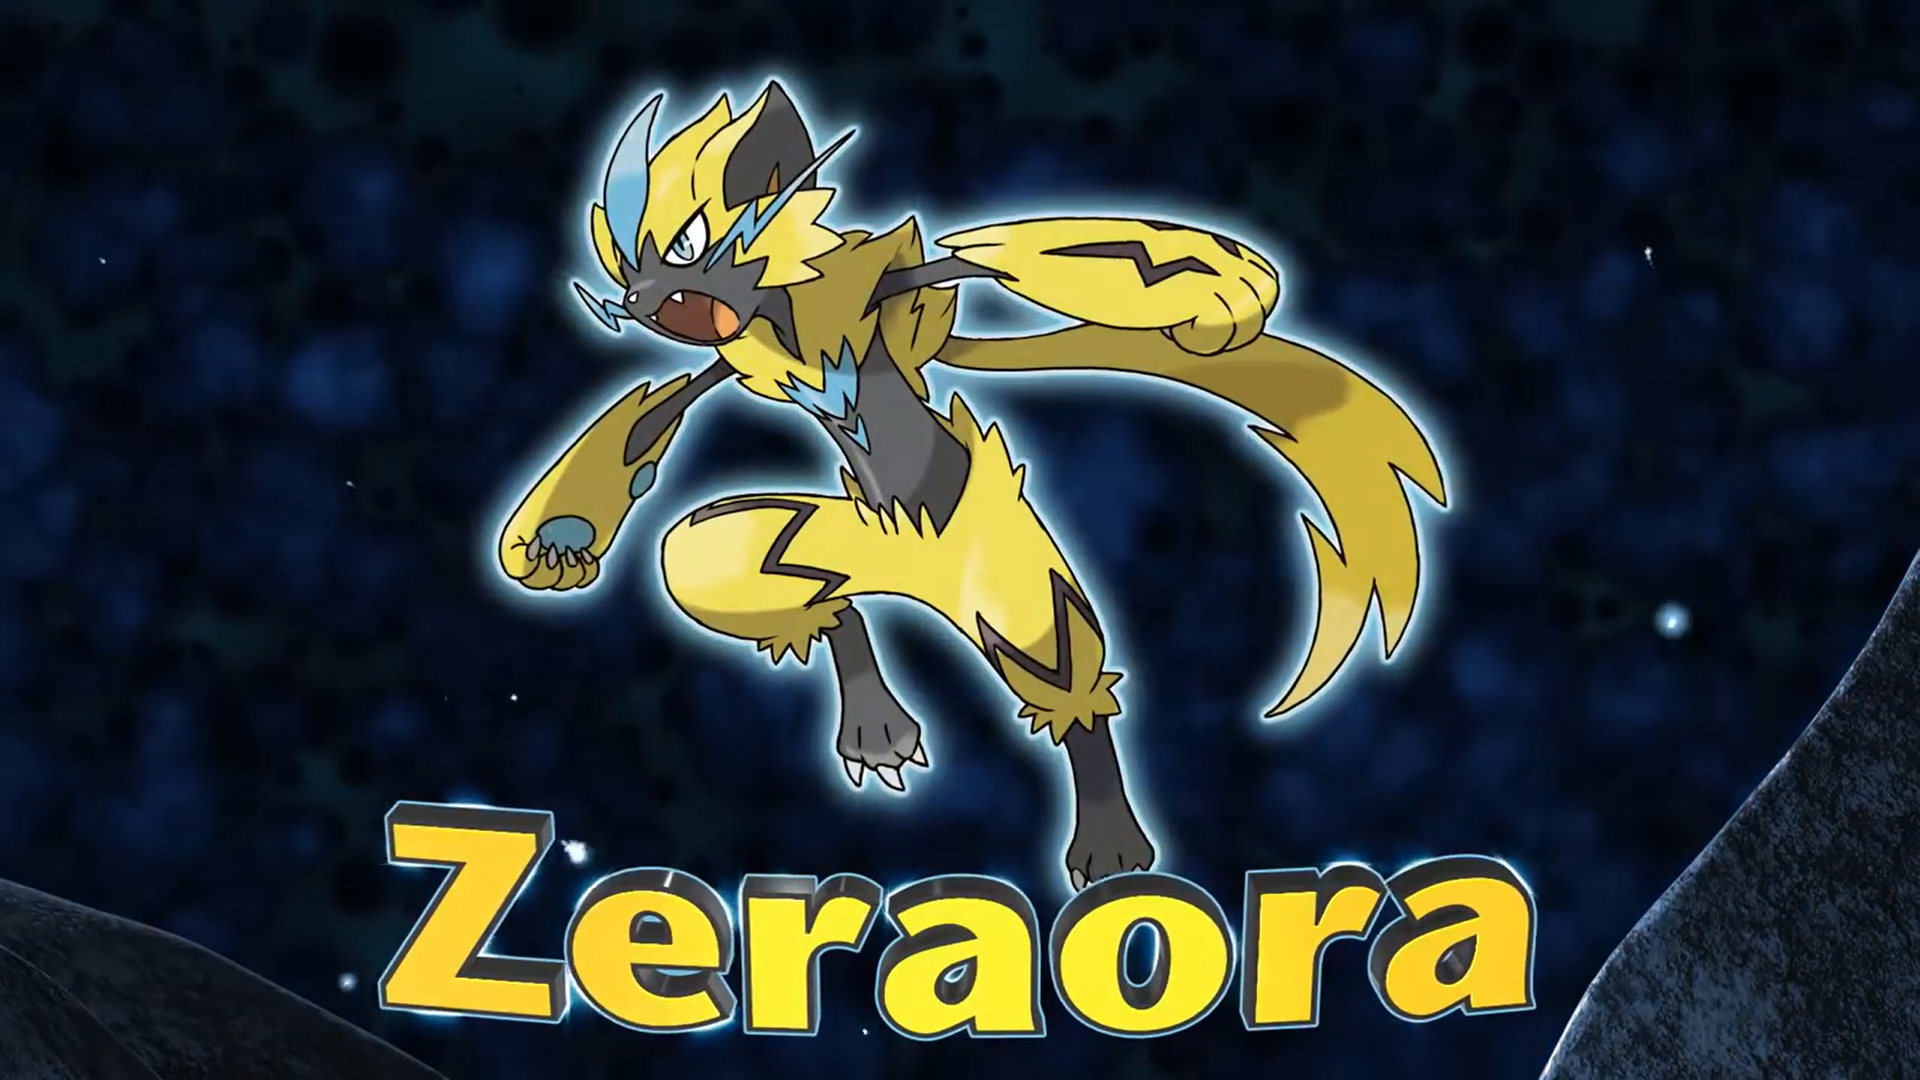 New Legendary Pokémon Zeraora Unveiled for Ultra Sun and Ultra Moon